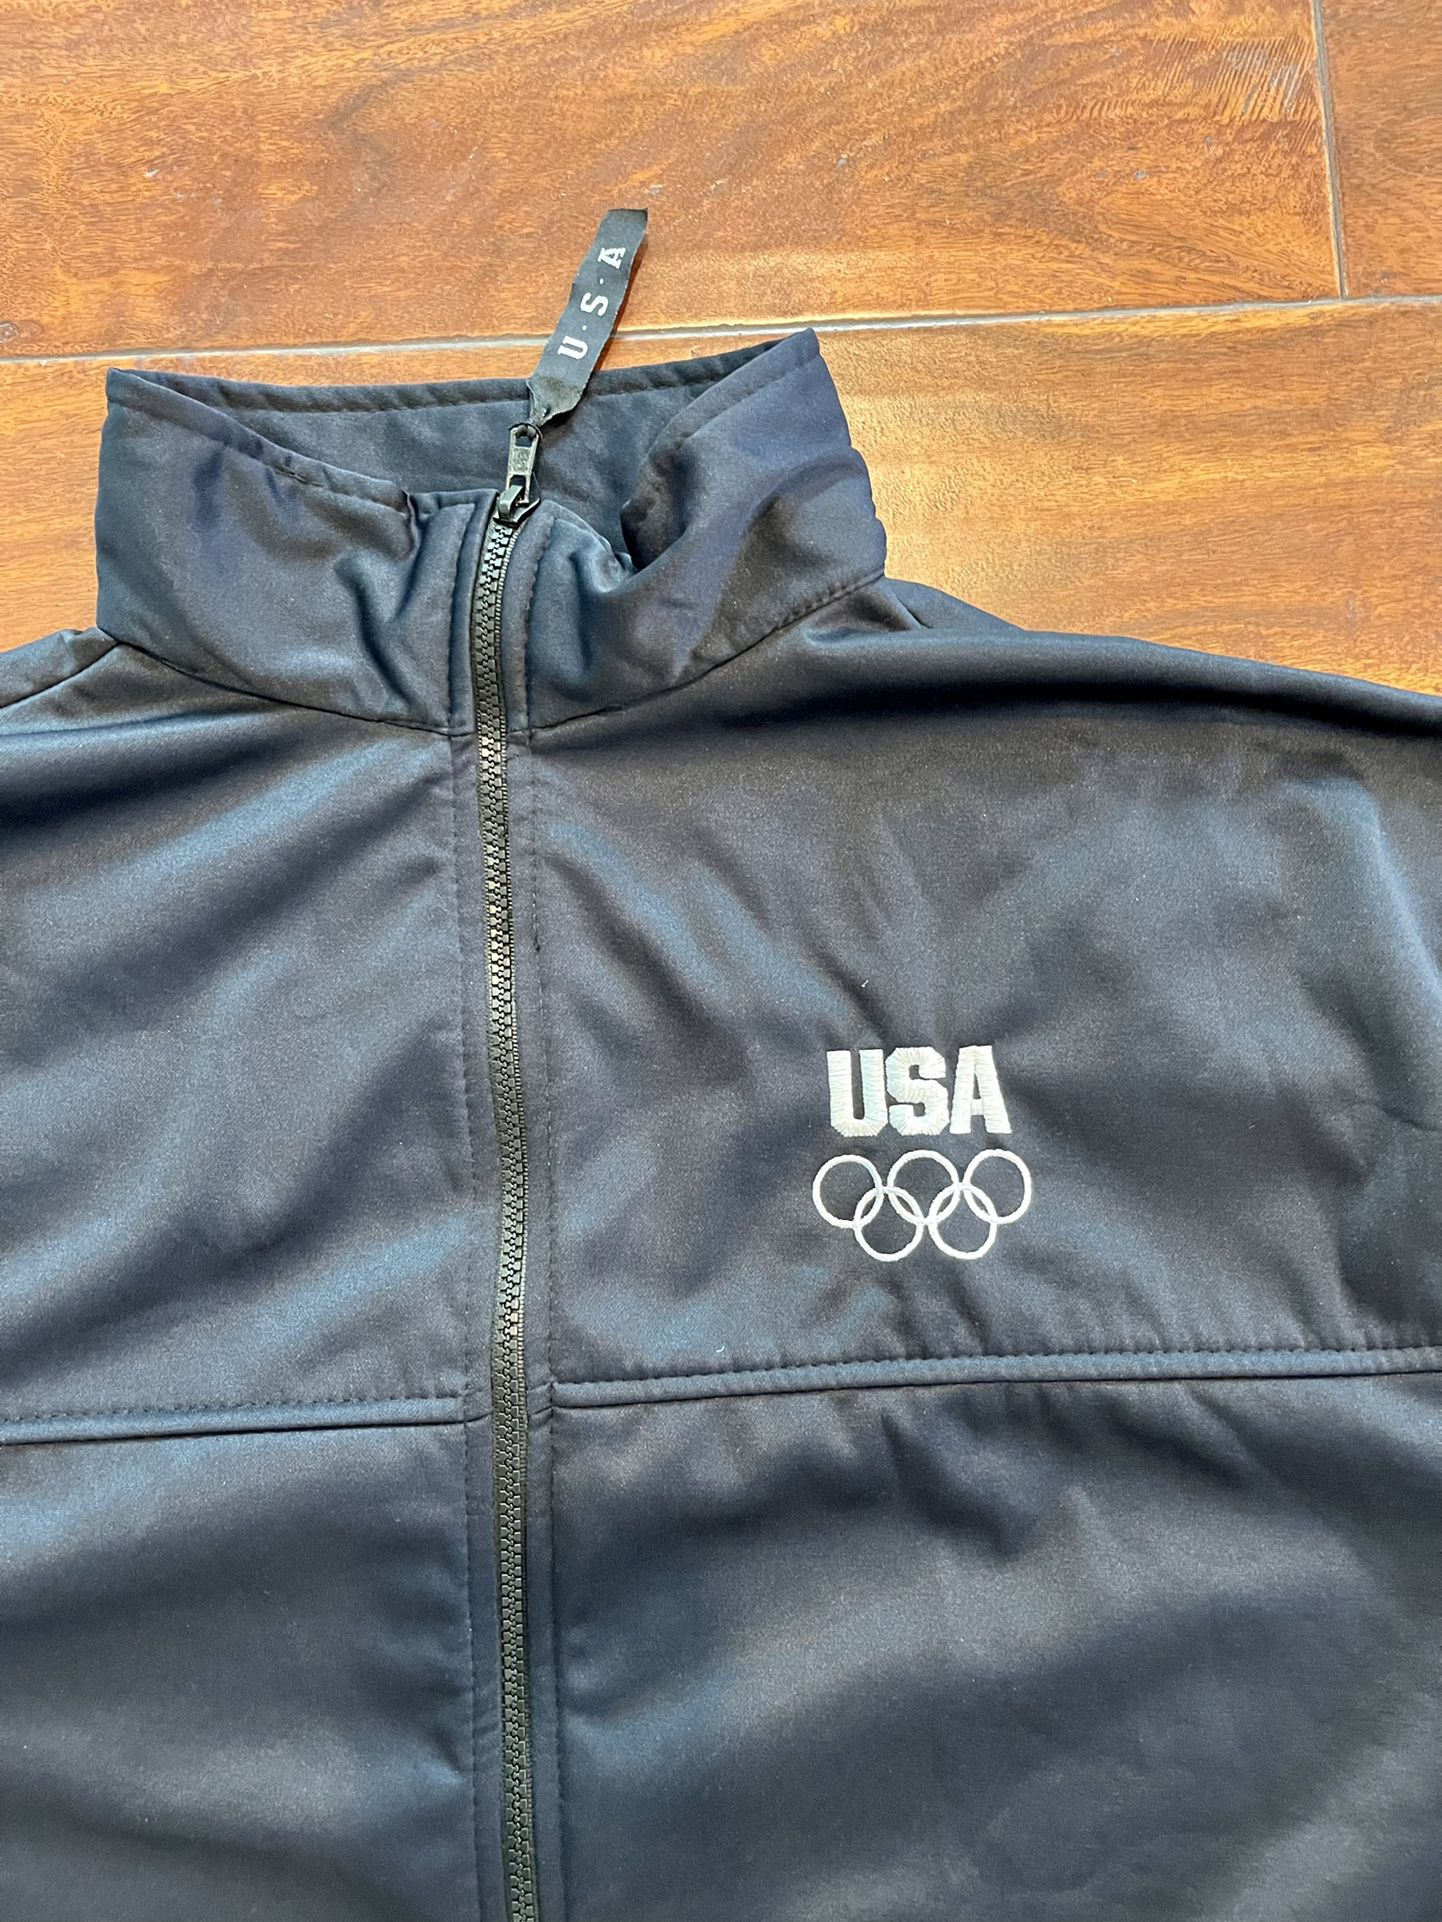 USA Olympic Committee Zip Up Mens Sweatshirt  XXLarge